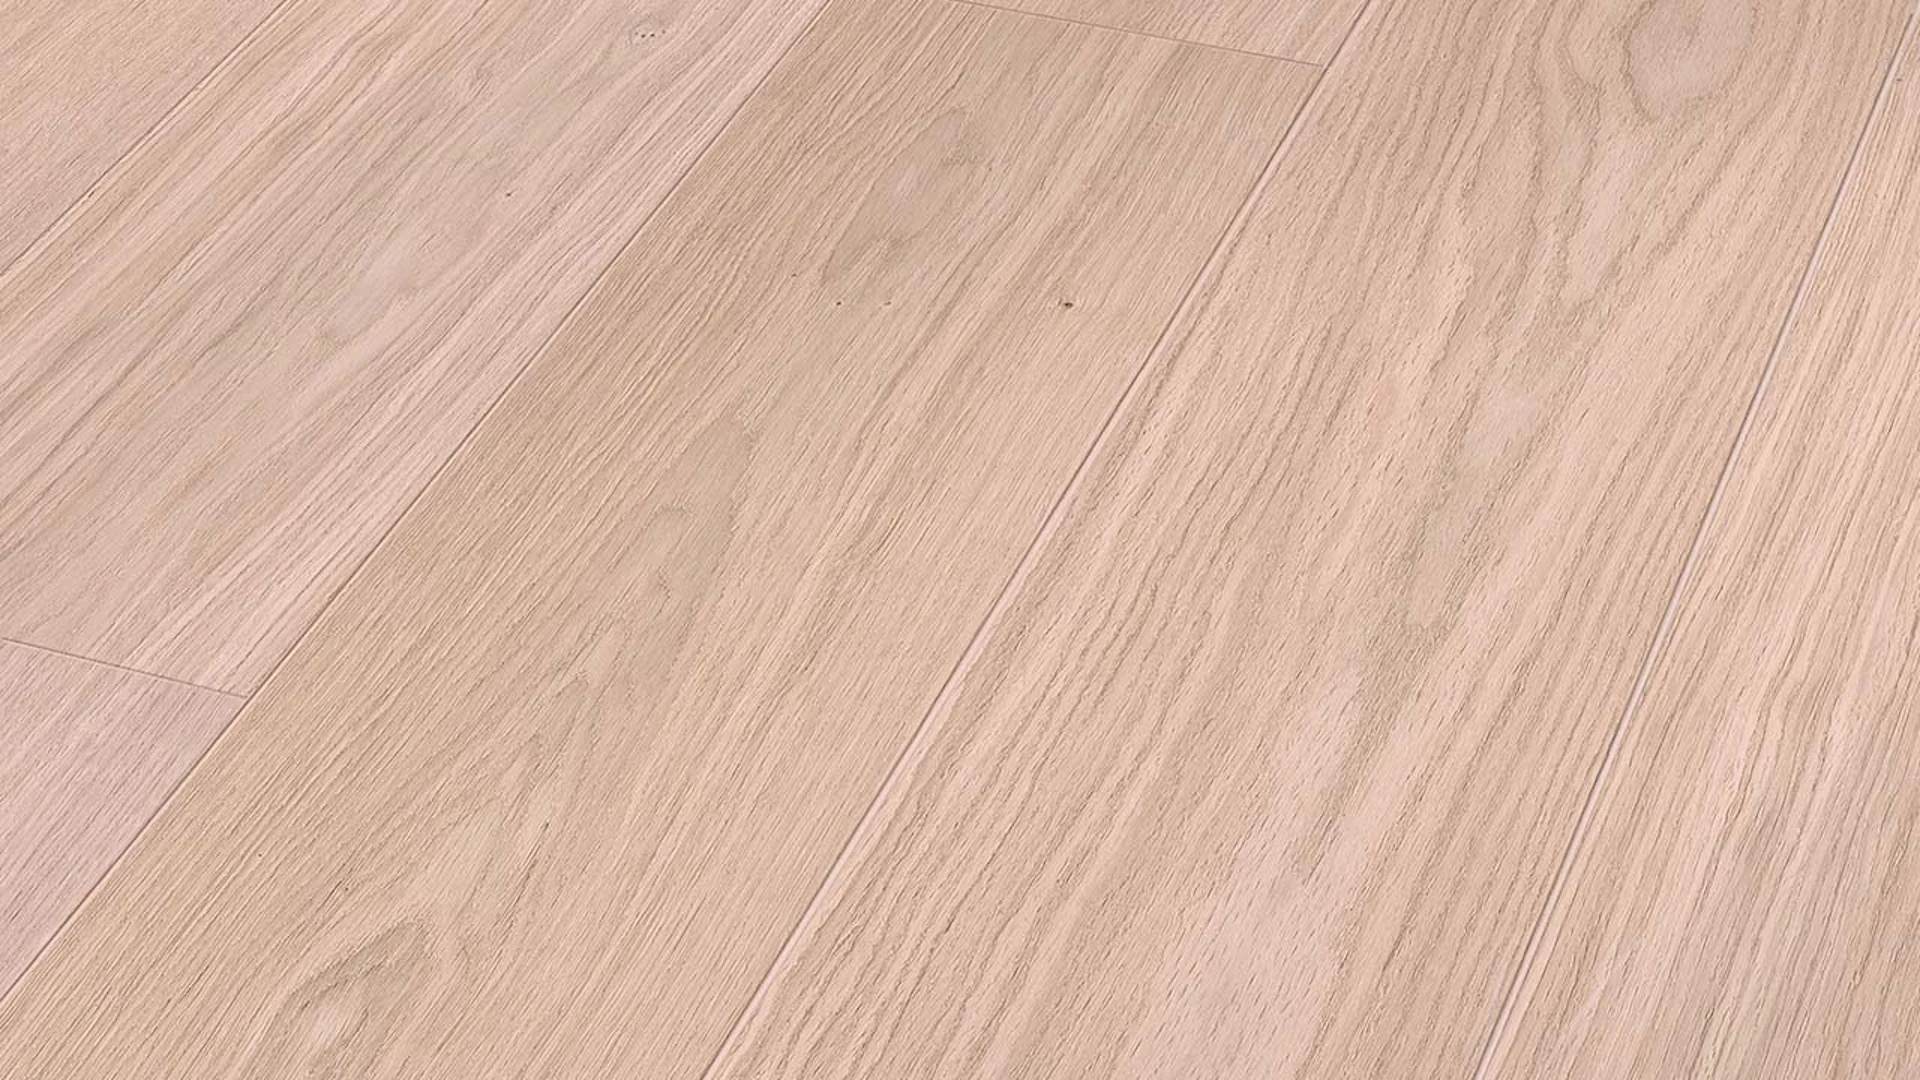 MEISTER Parquet Flooring - Longlife PD 450 Harmonic creamy white oak (500004-2400255-09005)